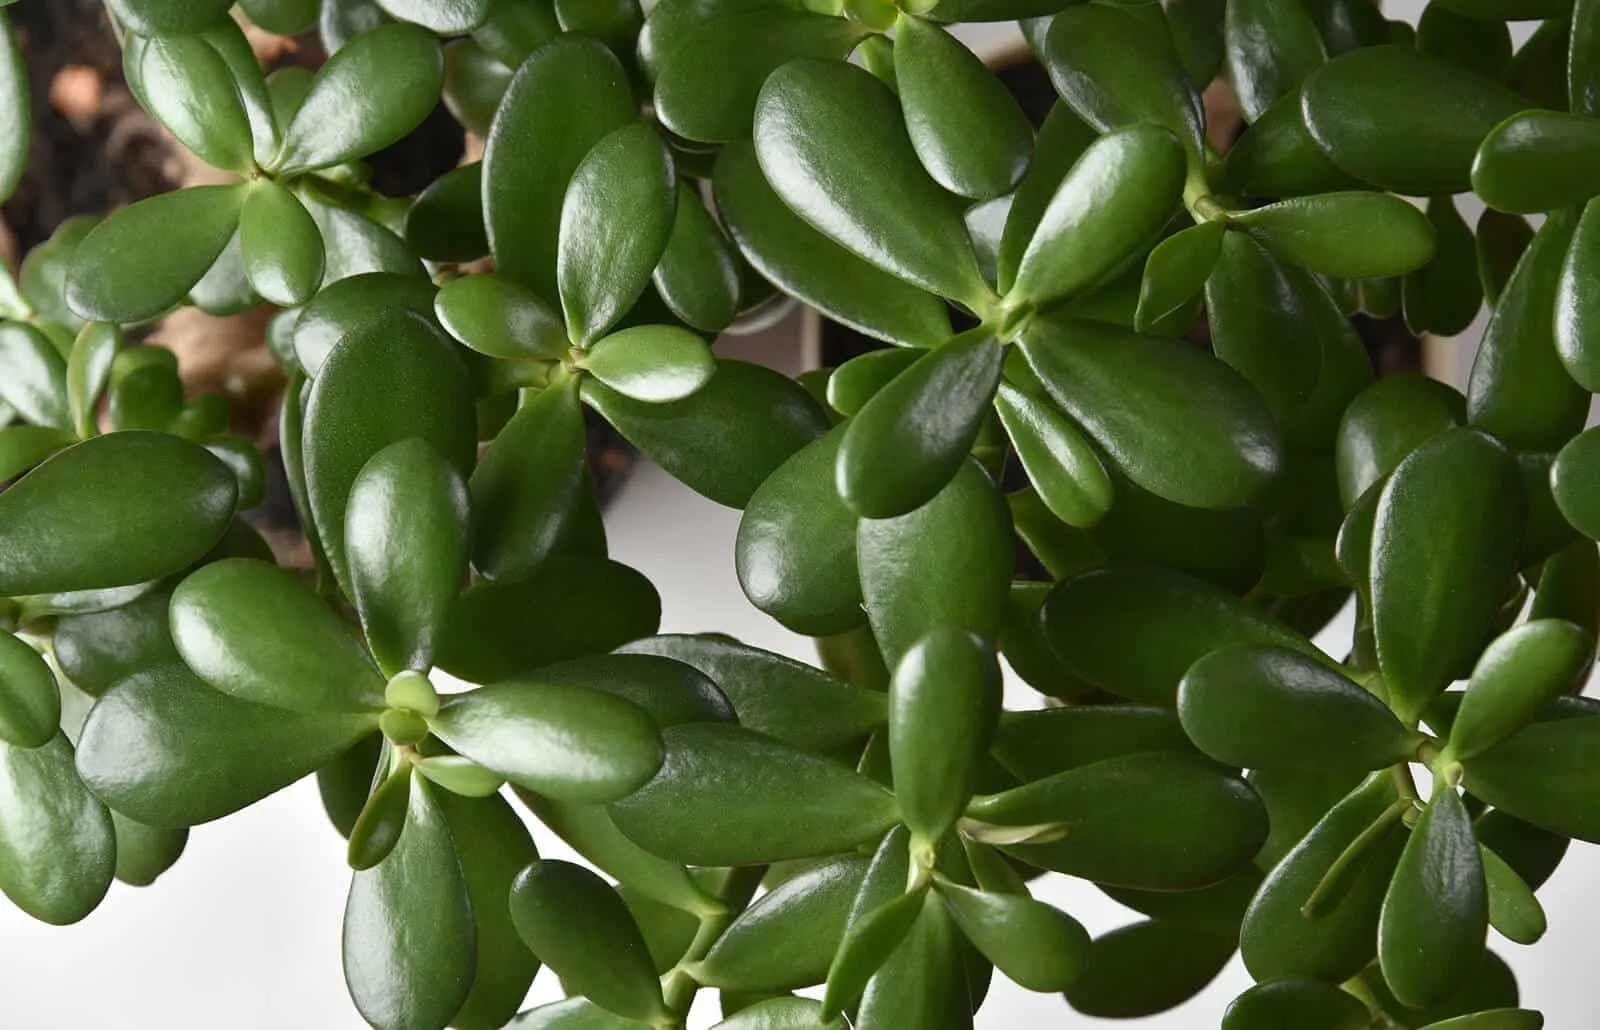 Jade plant: Benefits, care, types, propagation & decor ideas